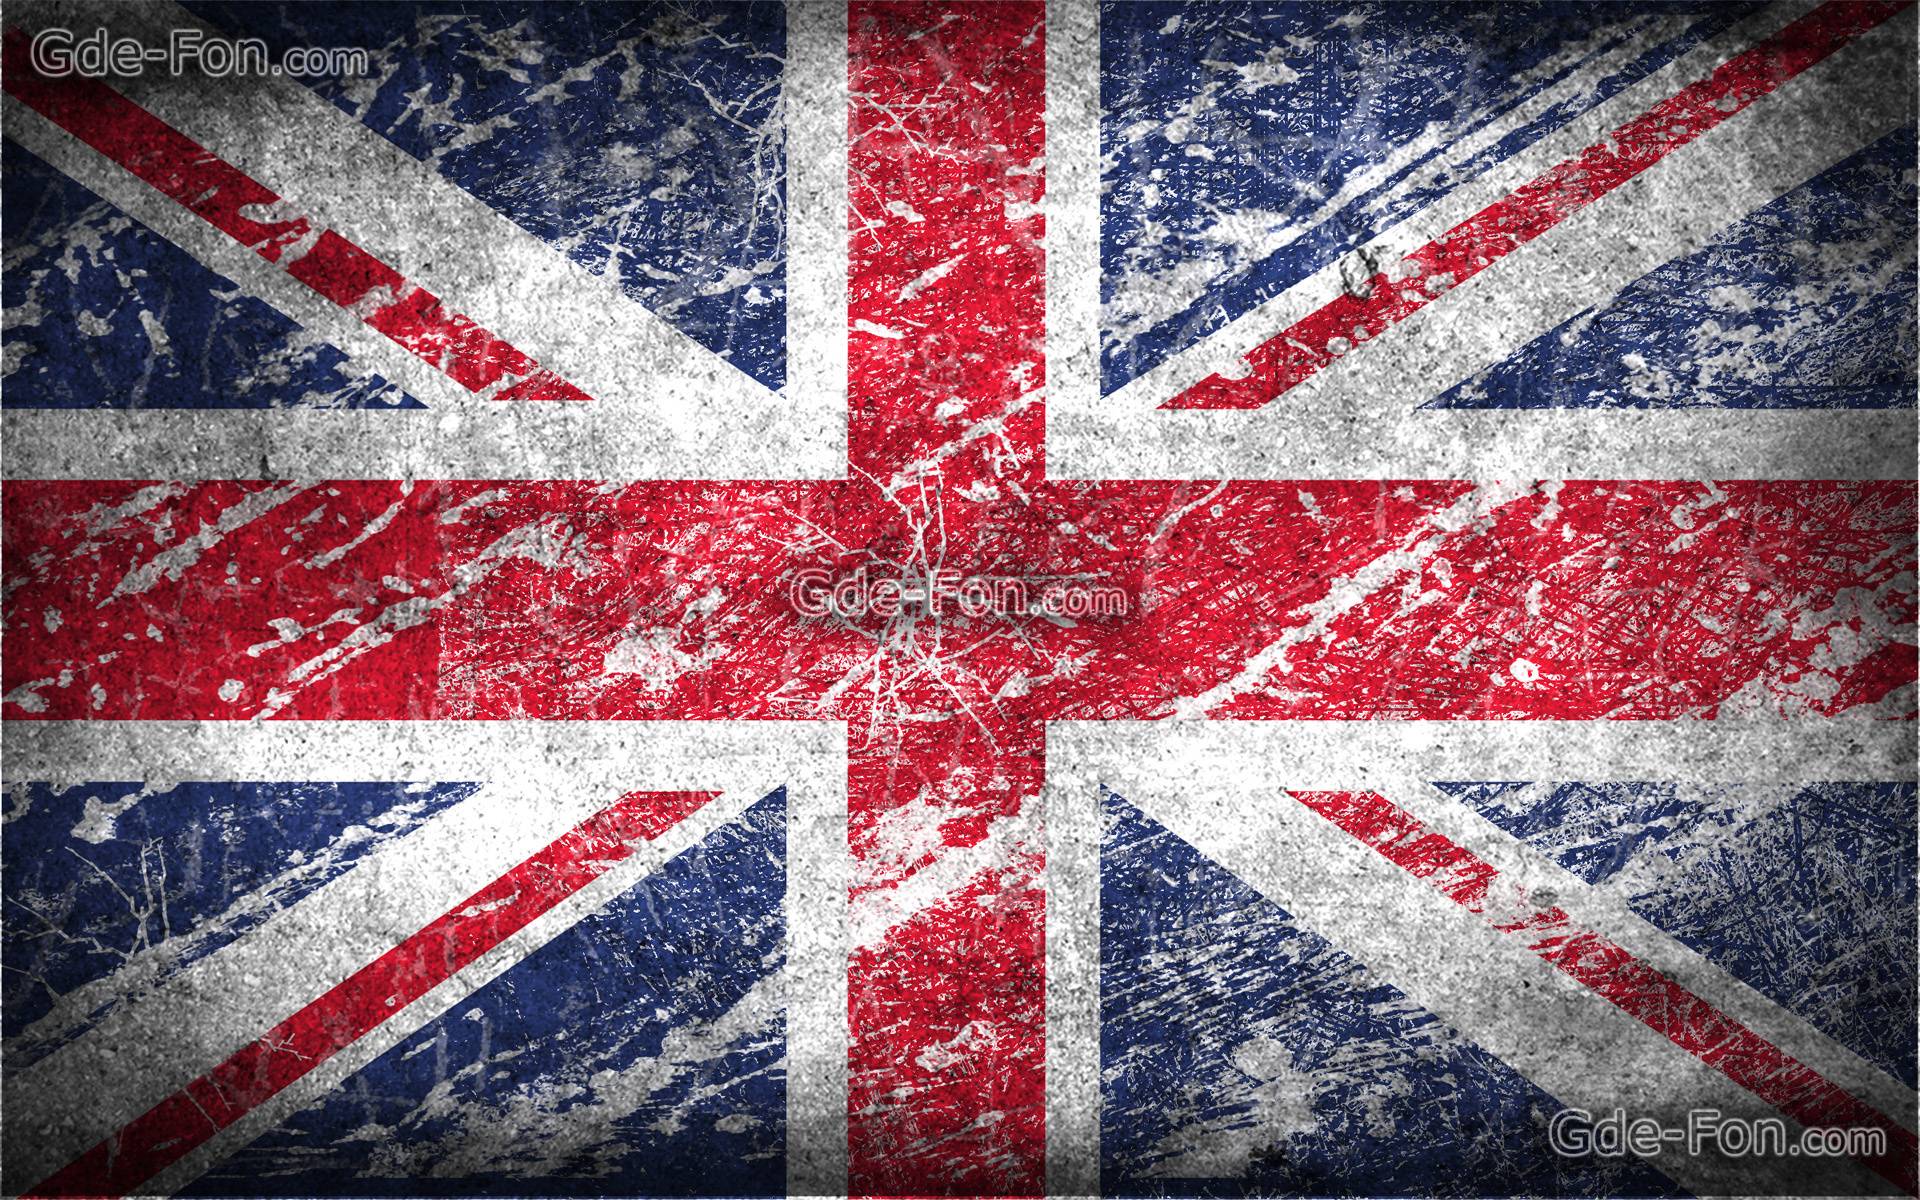 Protector of the Union | Union jack tattoo, England flag wallpaper, British  tattoo